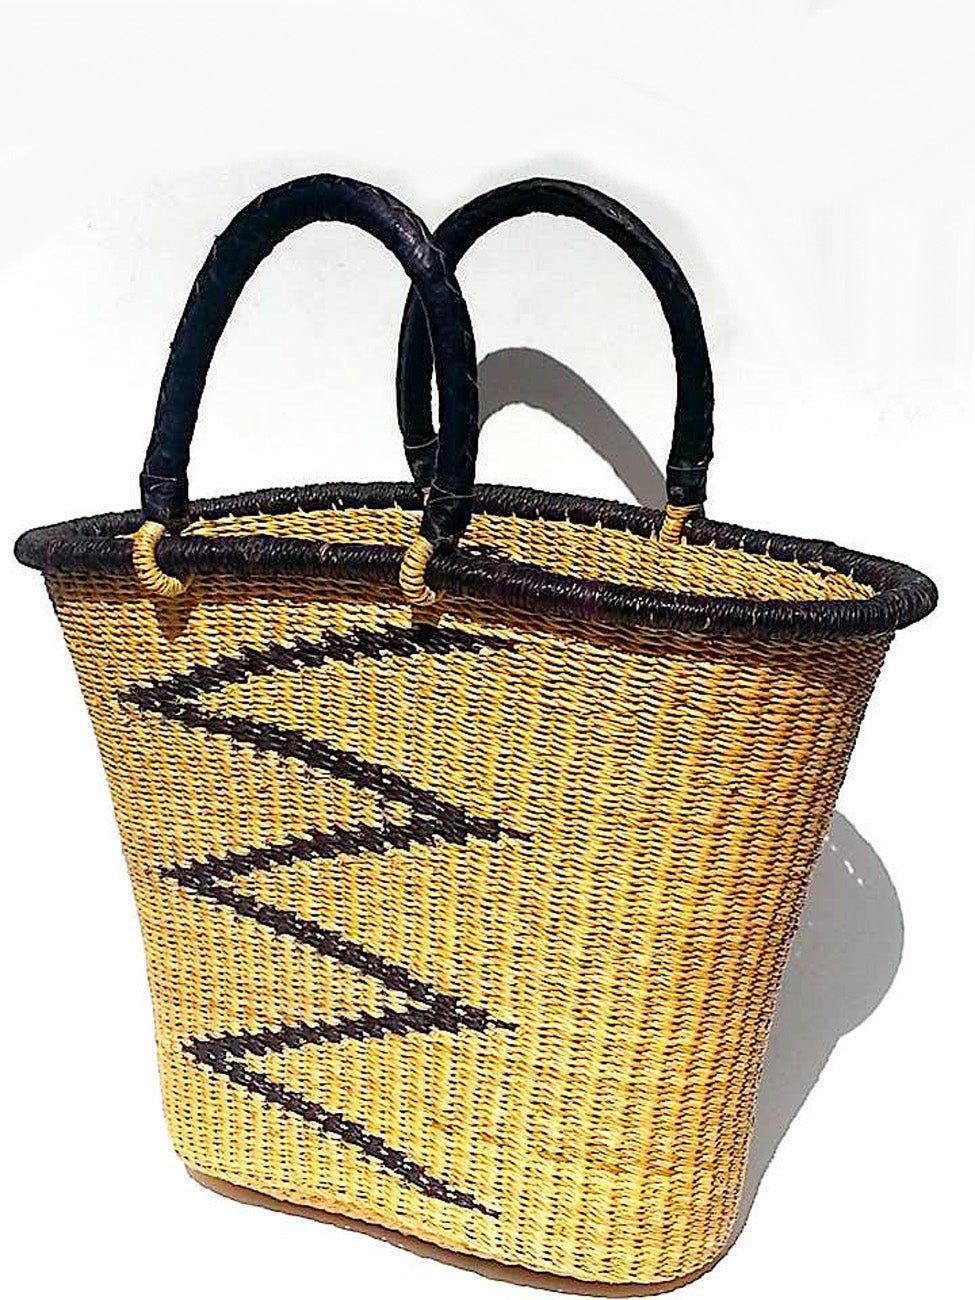 African Market Bucket Tote Bag Leather Handles